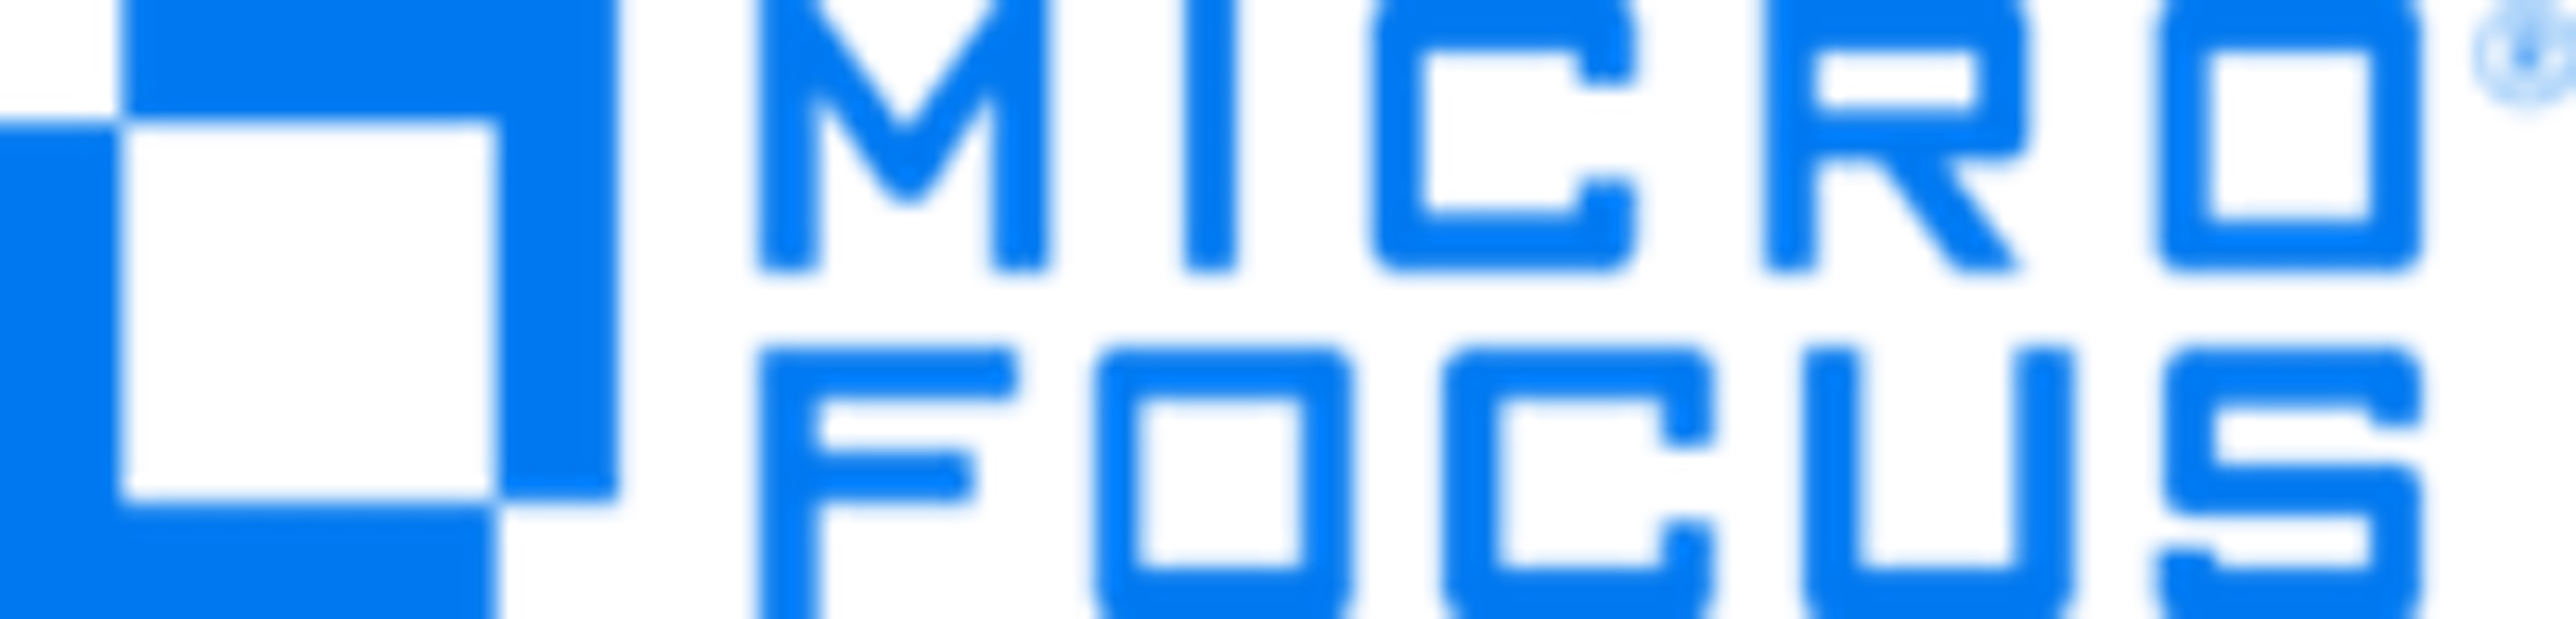 Project and Portfolio Management Logo